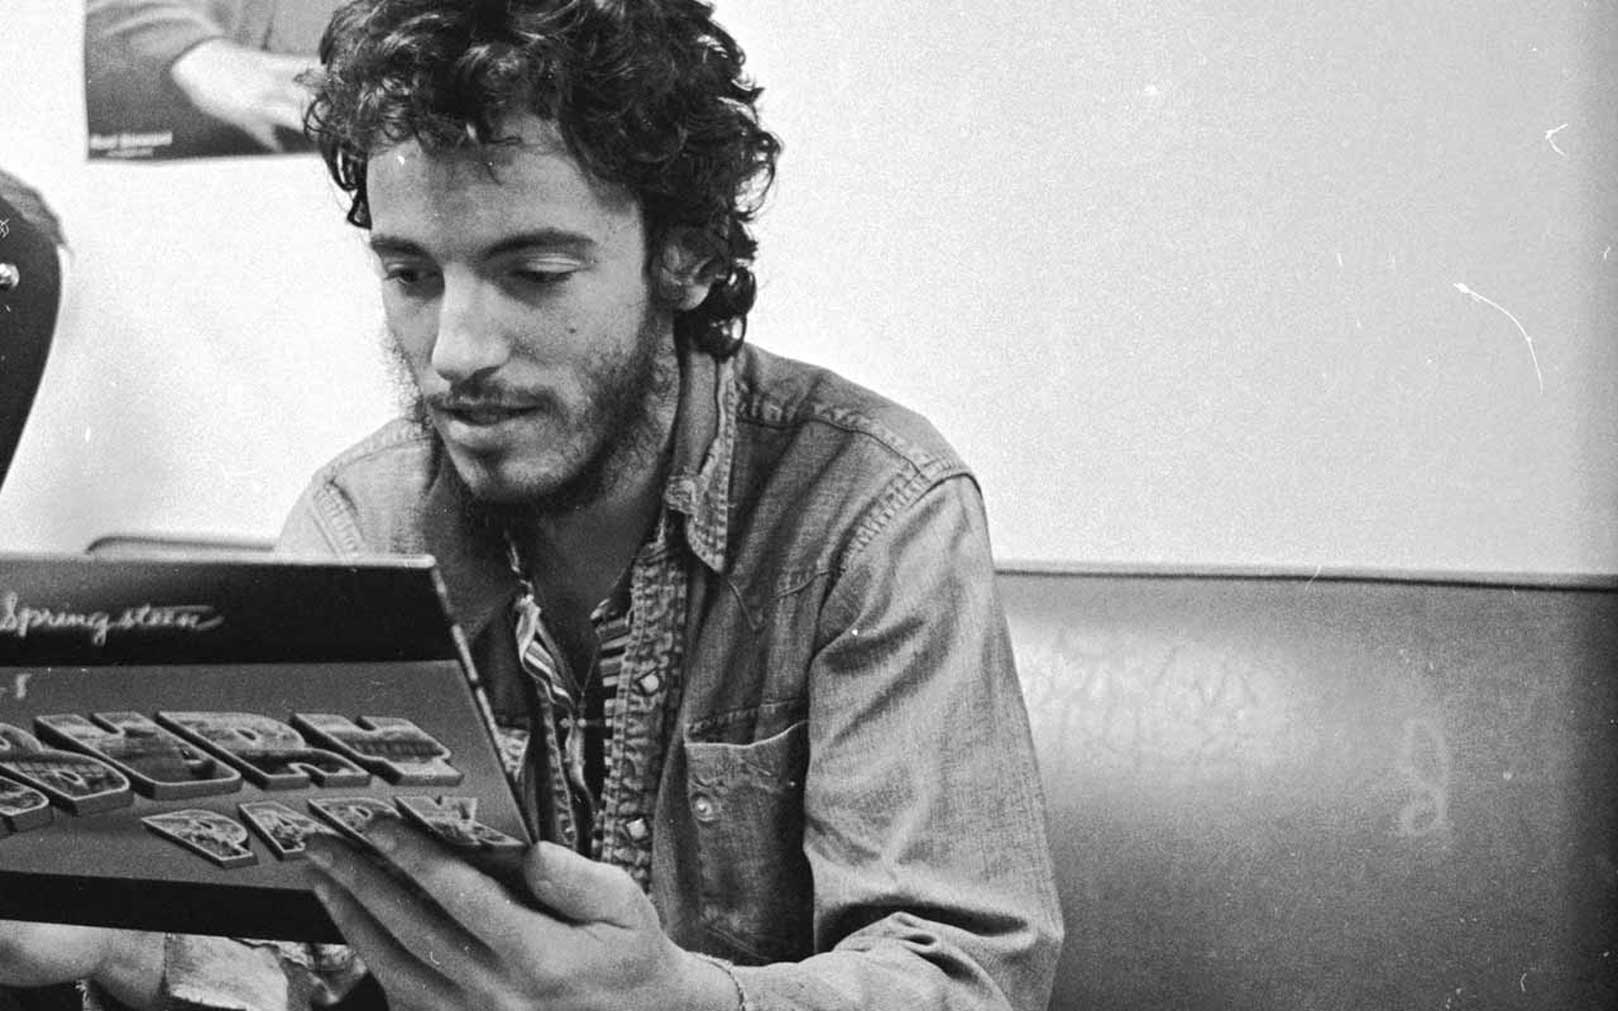 Bruce Springsteen con el álbum Greetings from Asbury Park. N.J. del año 1972